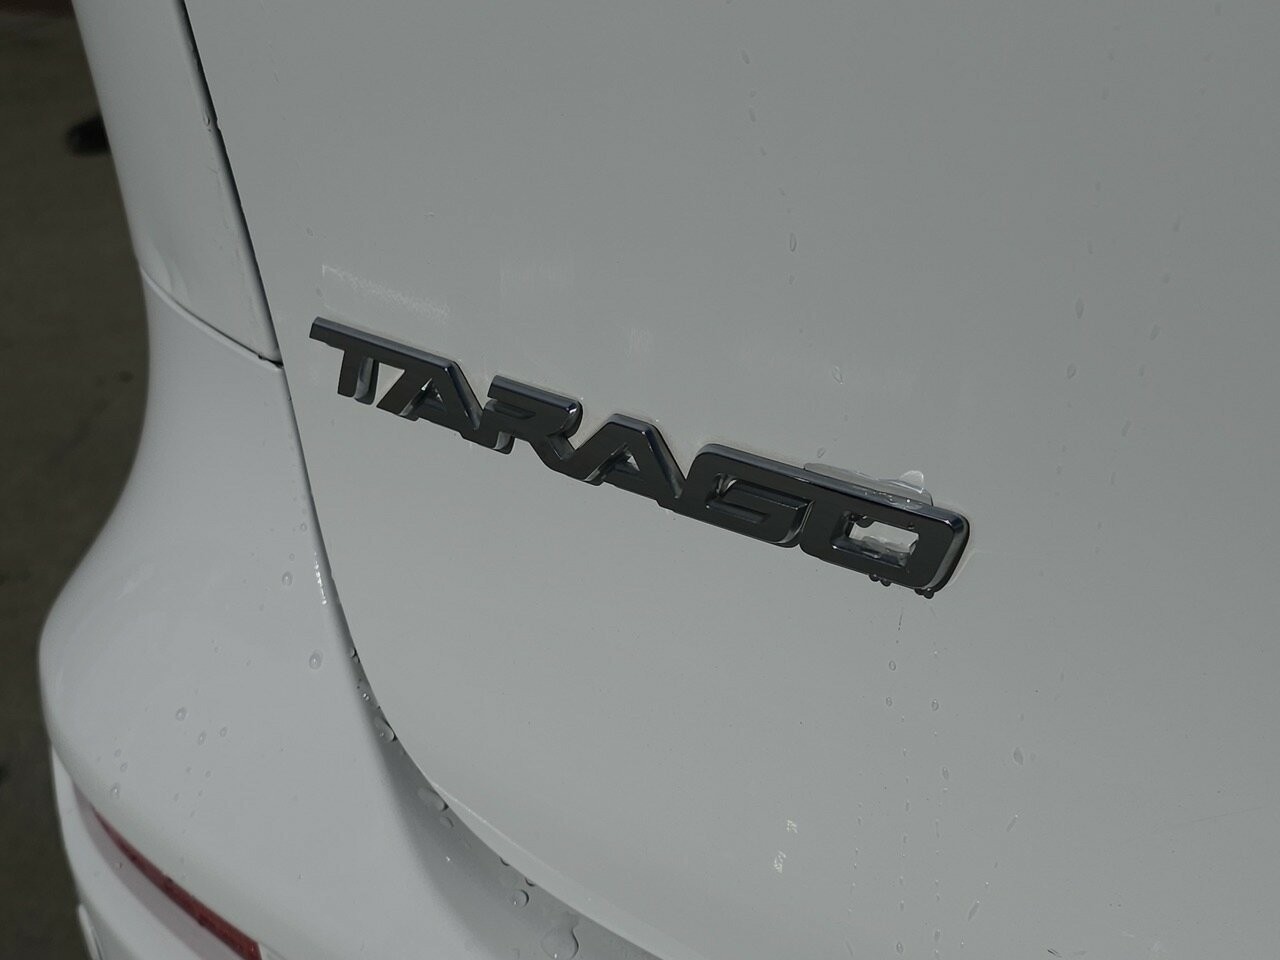 Toyota Tarago image 3